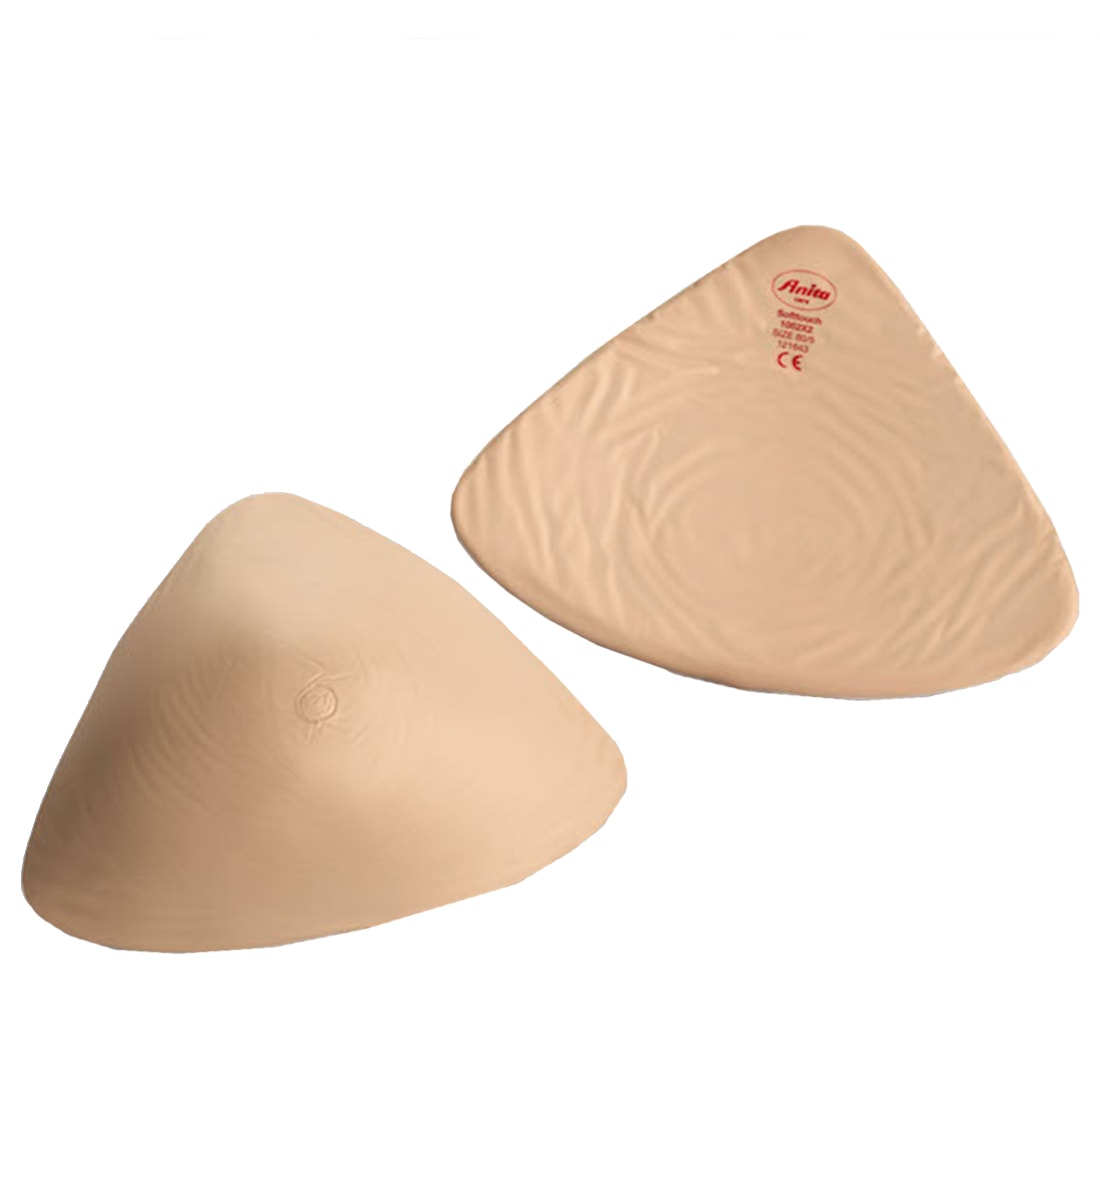 Anita Care Softtouch Silicone Breast Form (1052X2)- Skin